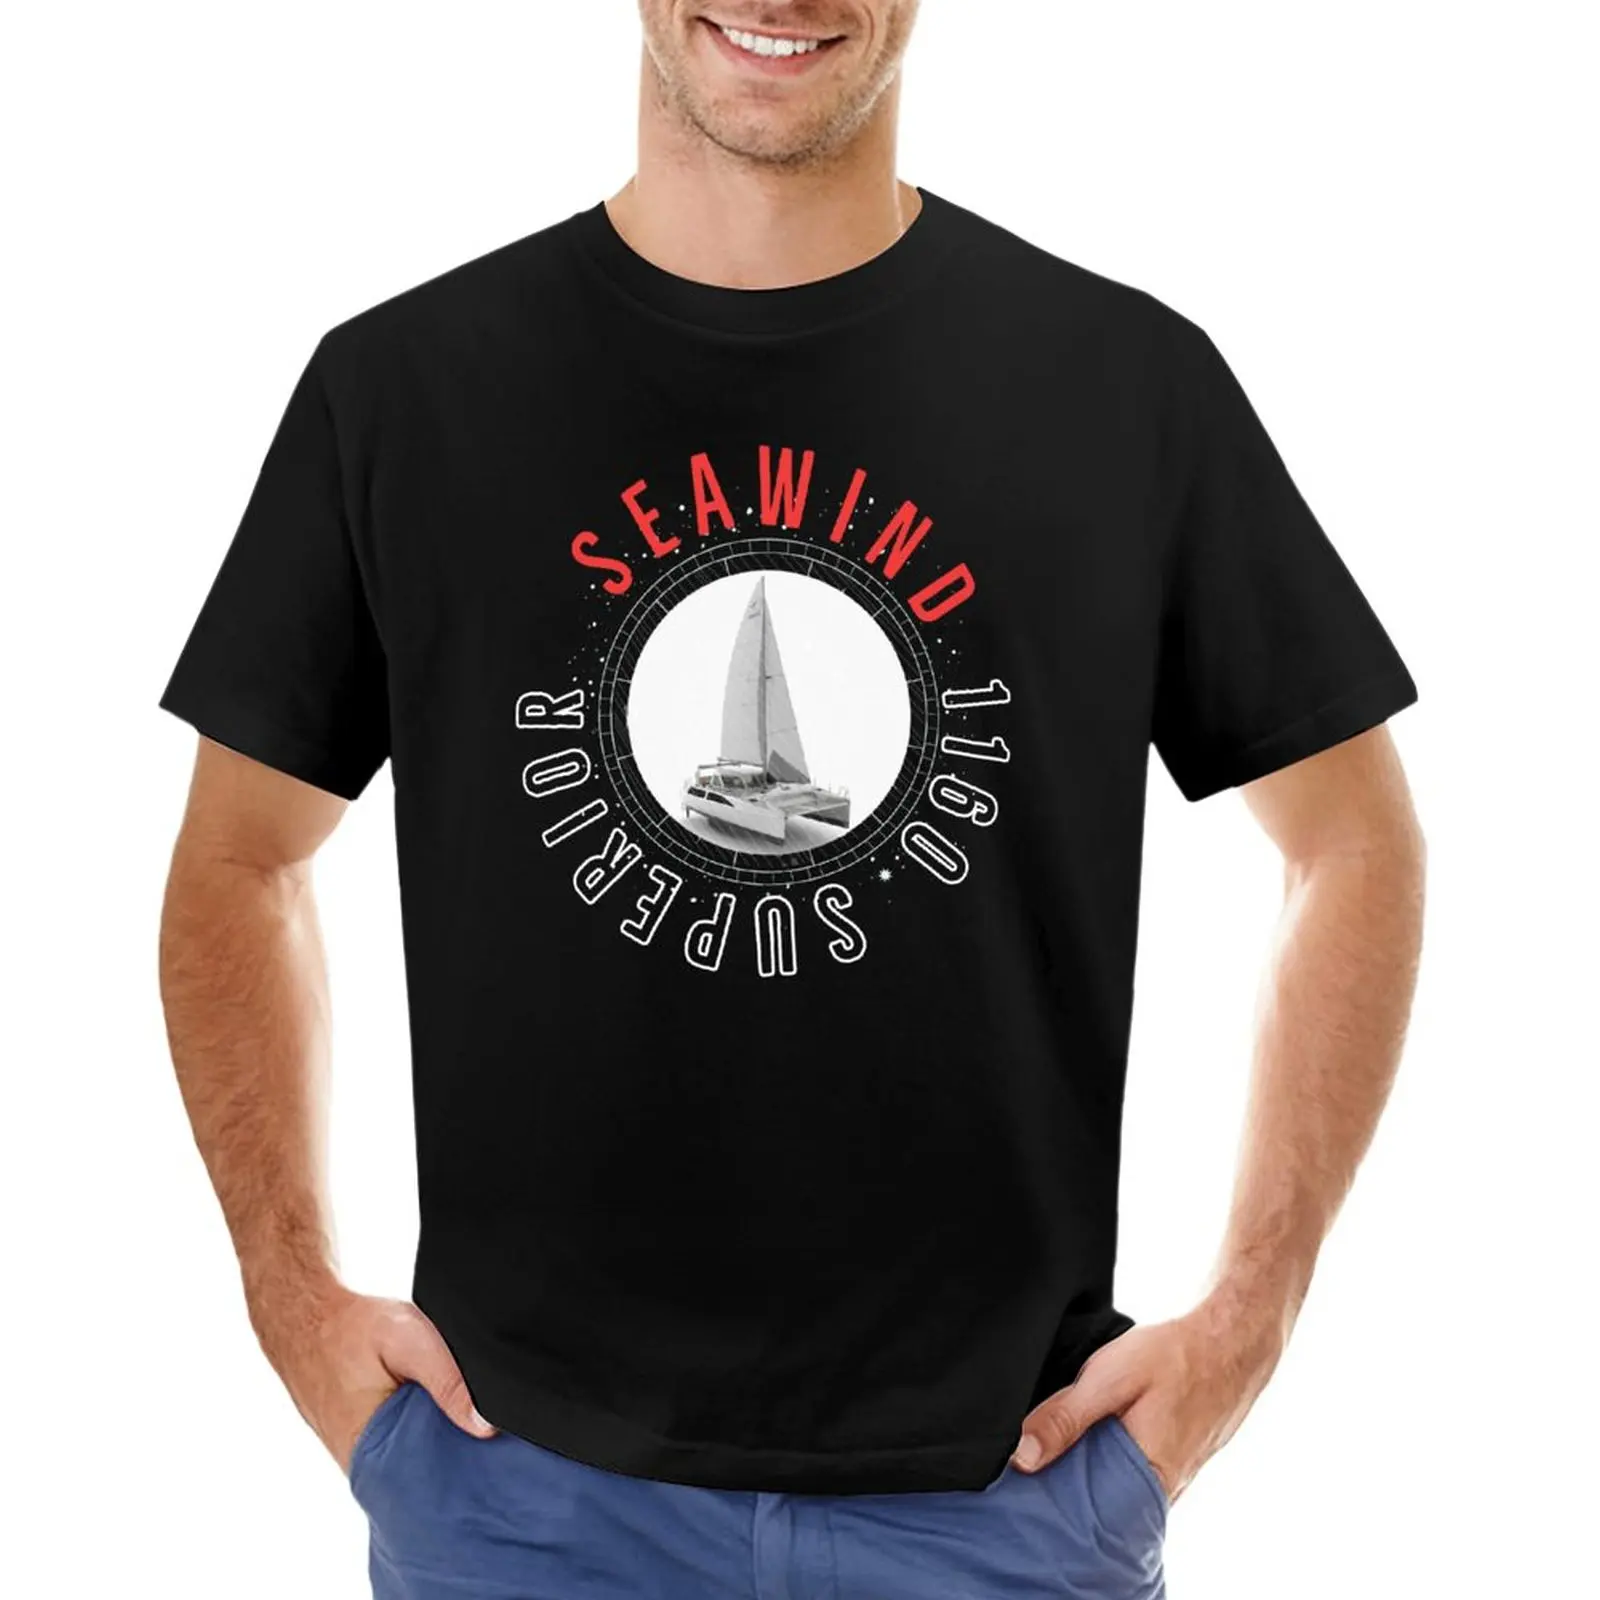 

Superior Seawind 1160 Catamaran Boat T-Shirt plain graphics mens graphic t-shirts hip hop